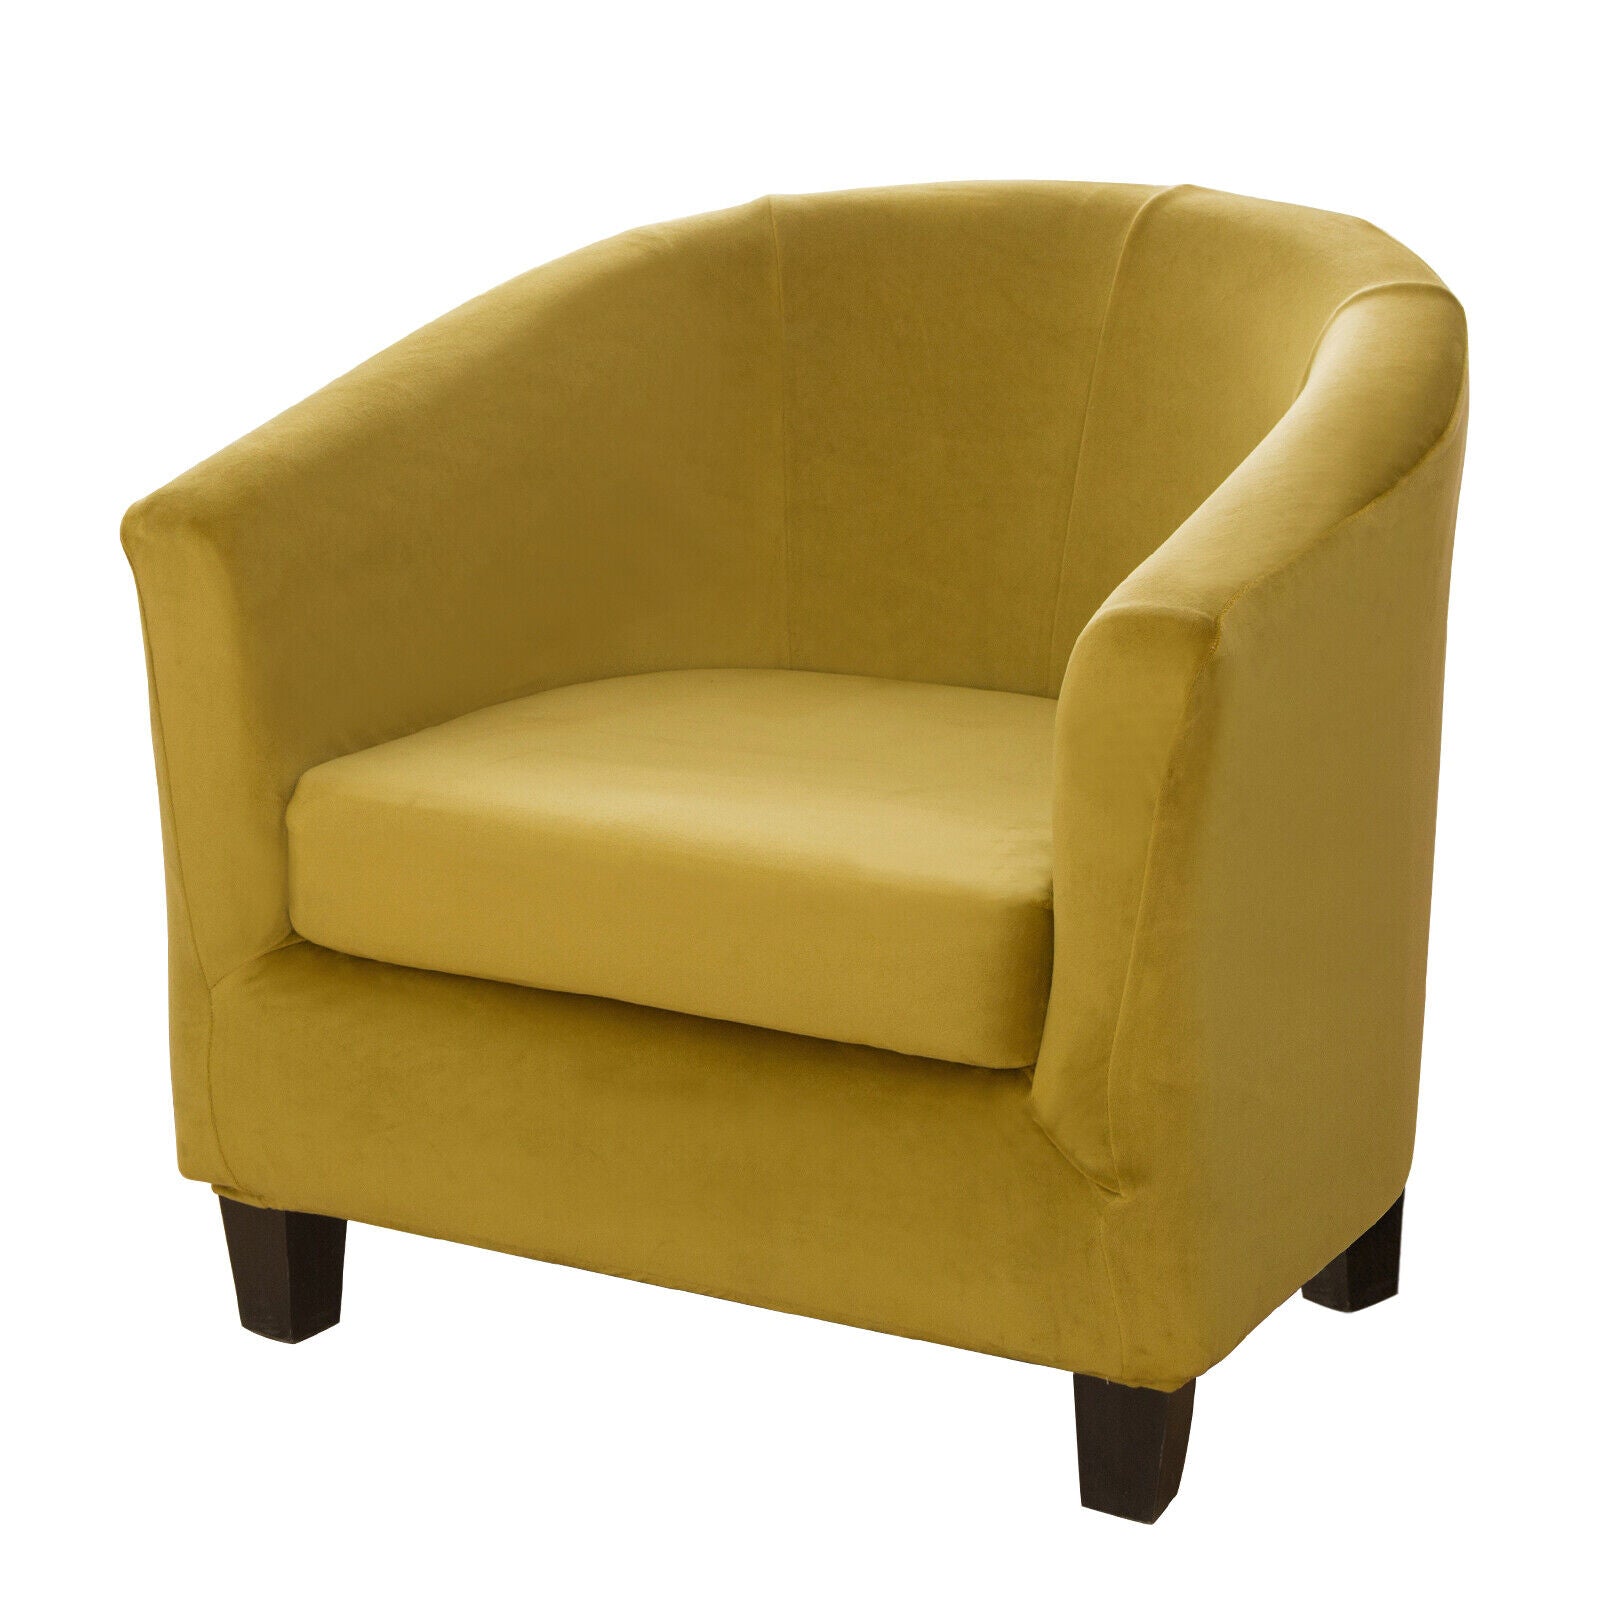 Club Sofa Cover Chair Cover Stretch Tub Chair Slipcovers Chair Armchair Slipcover